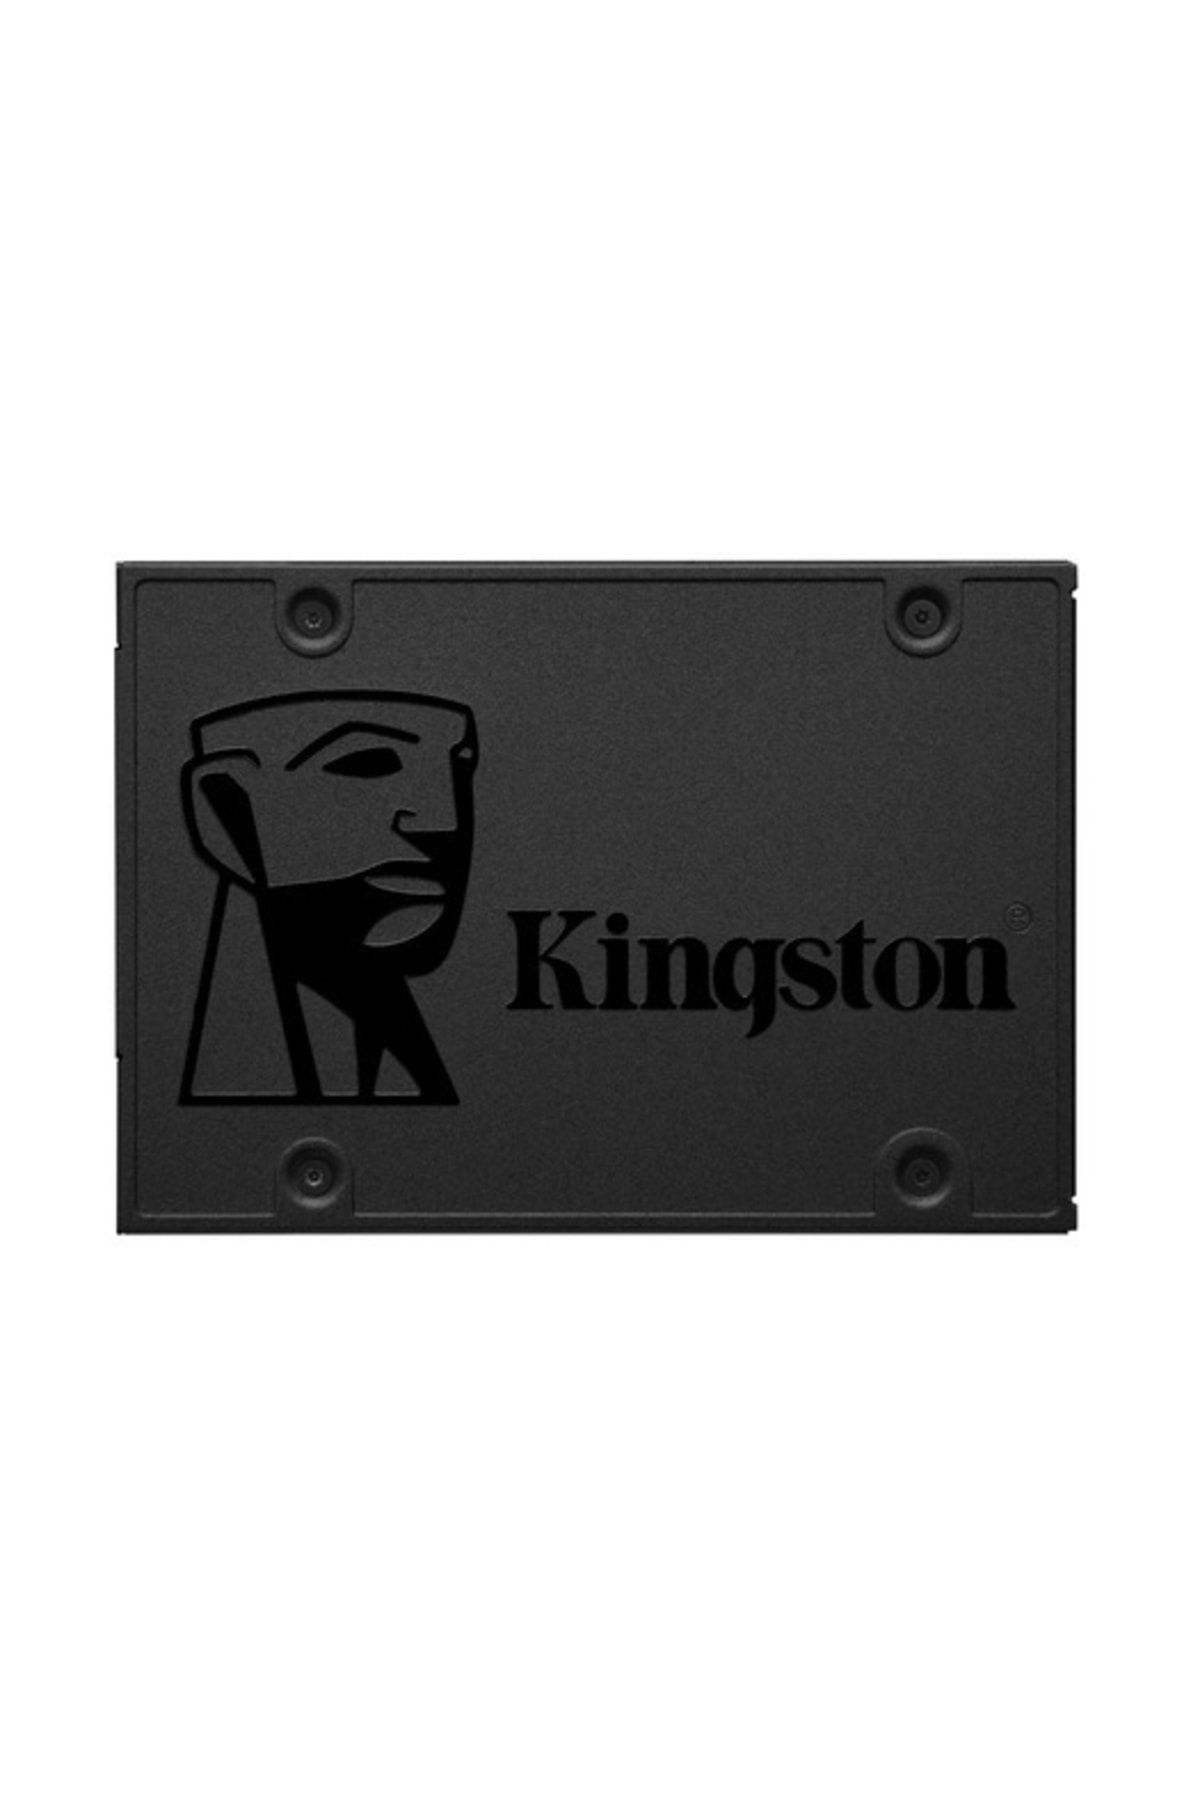 Kingston 240 Gb A400 Sata3 2.5 Inc Ssd Disk